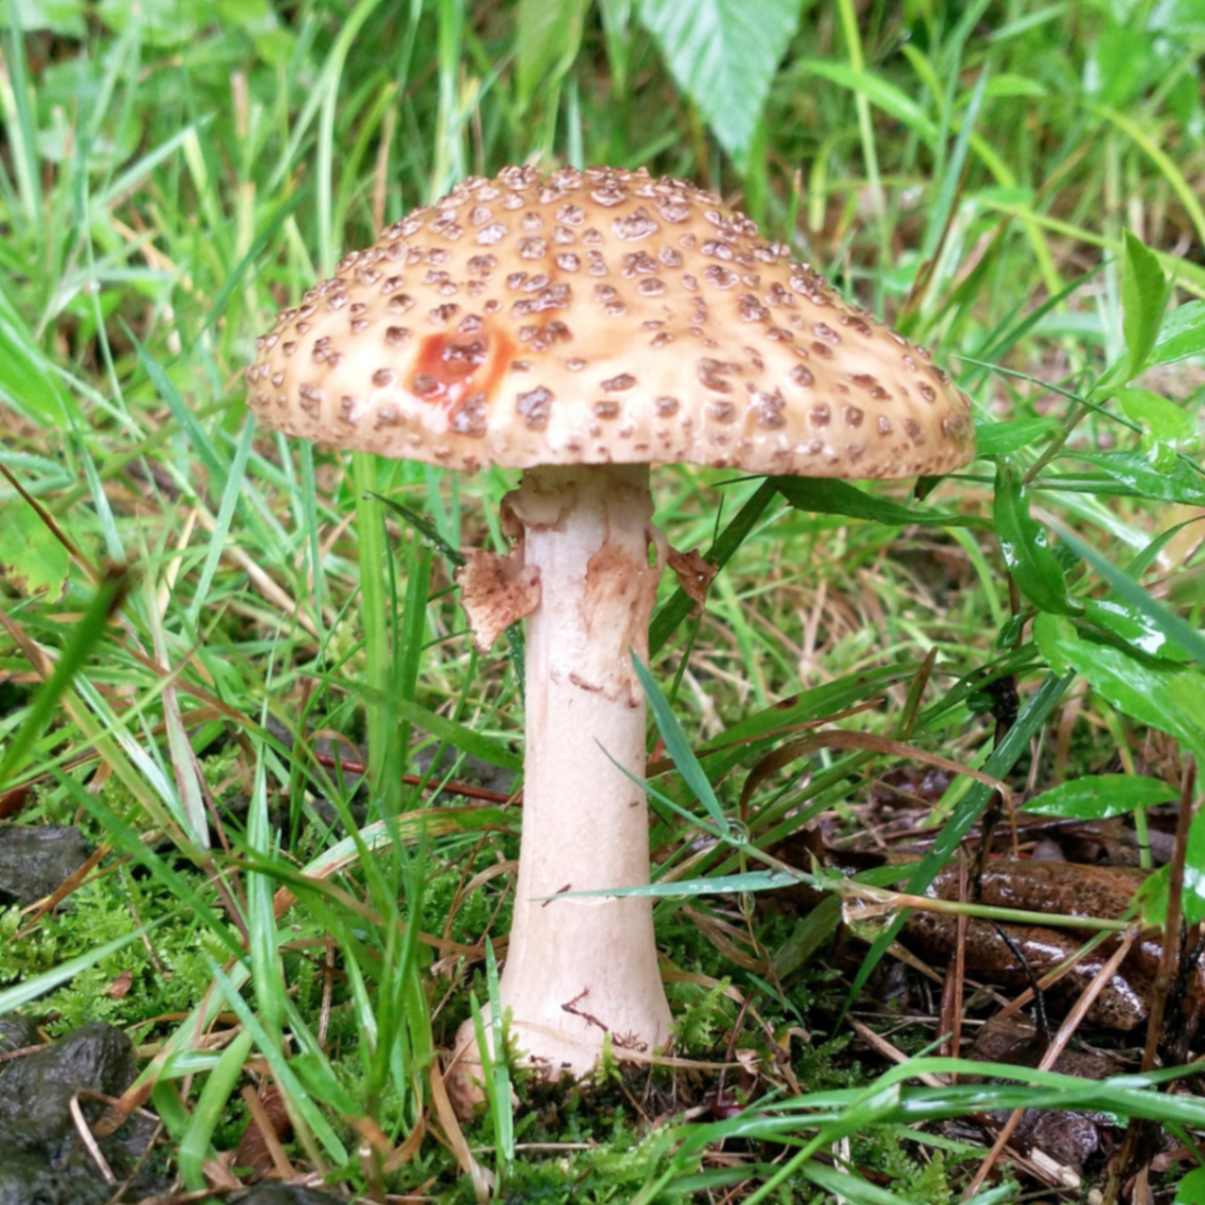 Possible Amanita Mushroom.